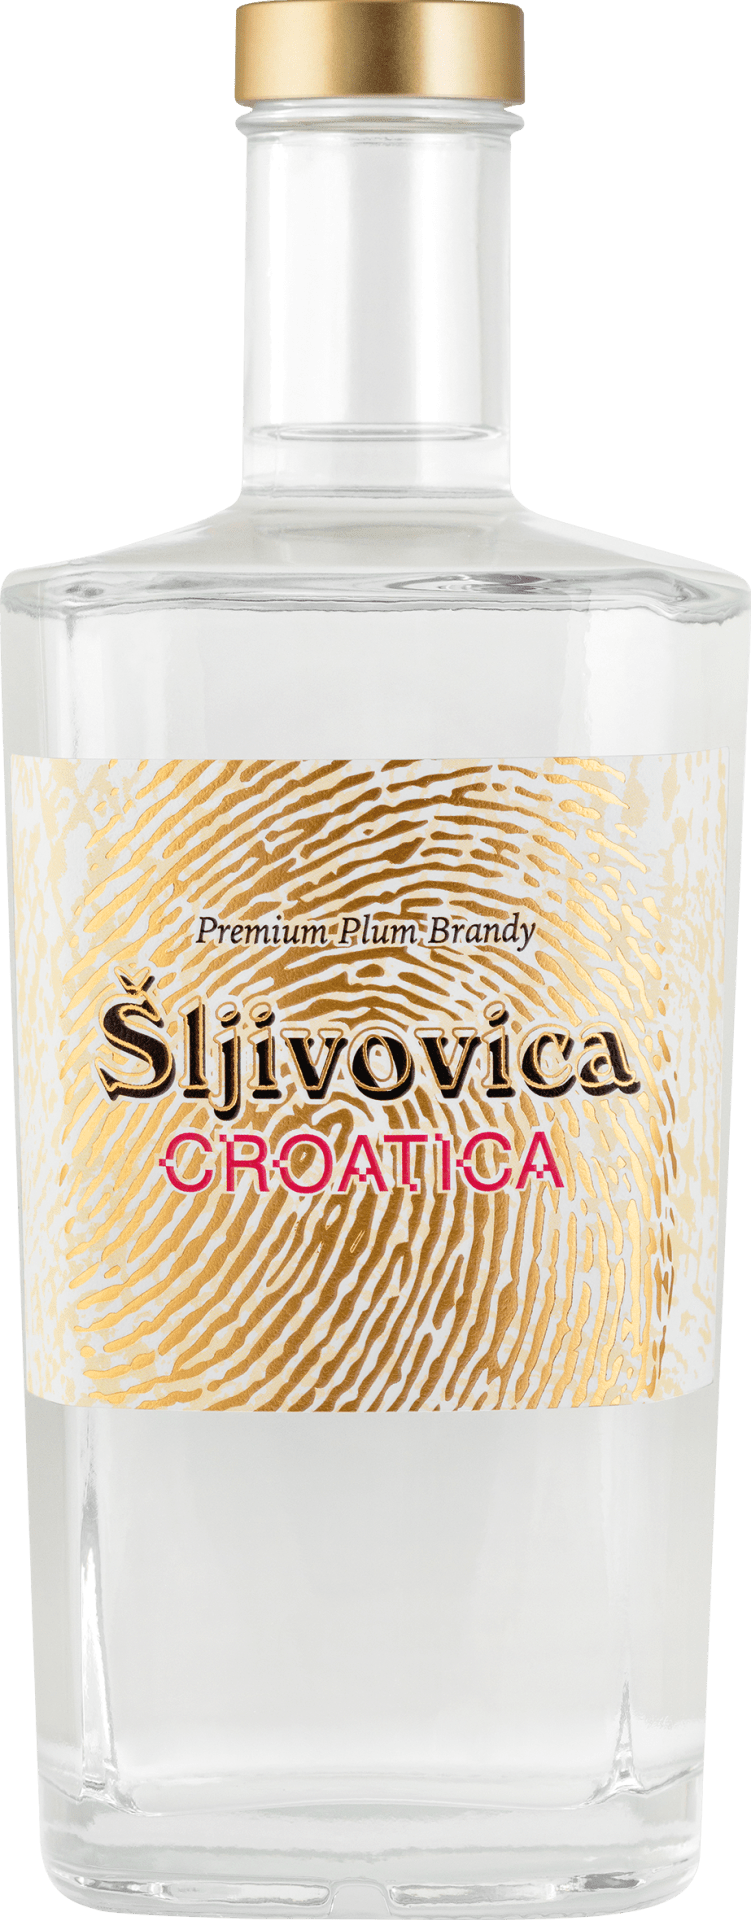 Premium Sljivovica Croatica 